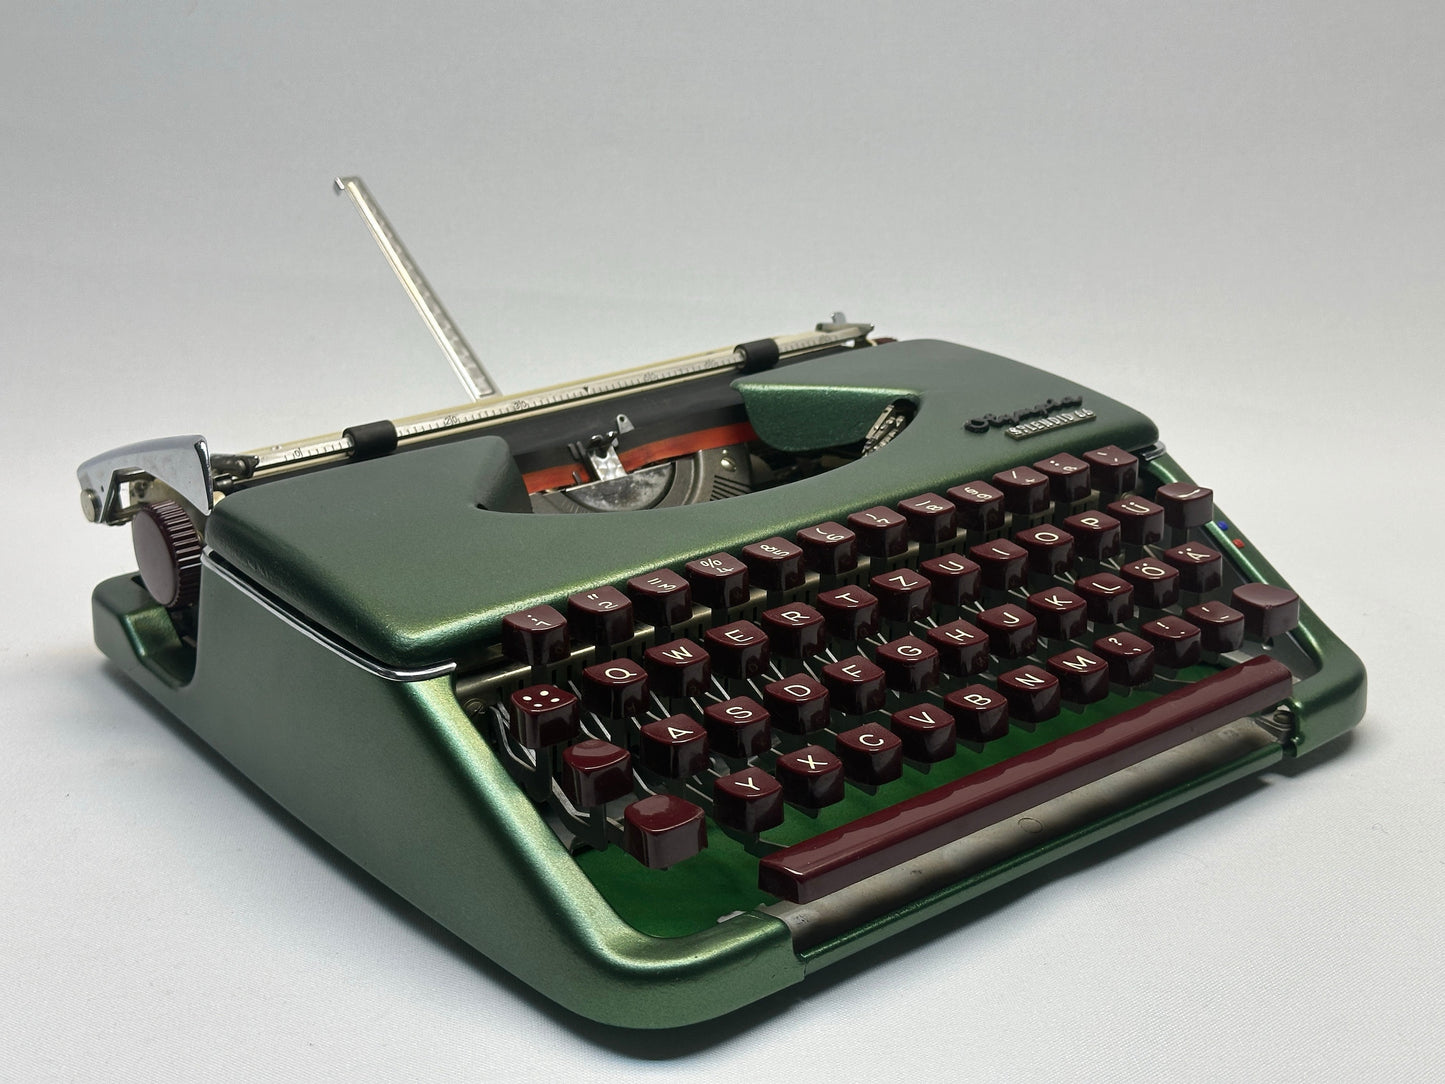 Olympia Splendid 33 Typewriter in Dark Green with Burgundy QWERTZ Keyboard & Rare Leather Bag